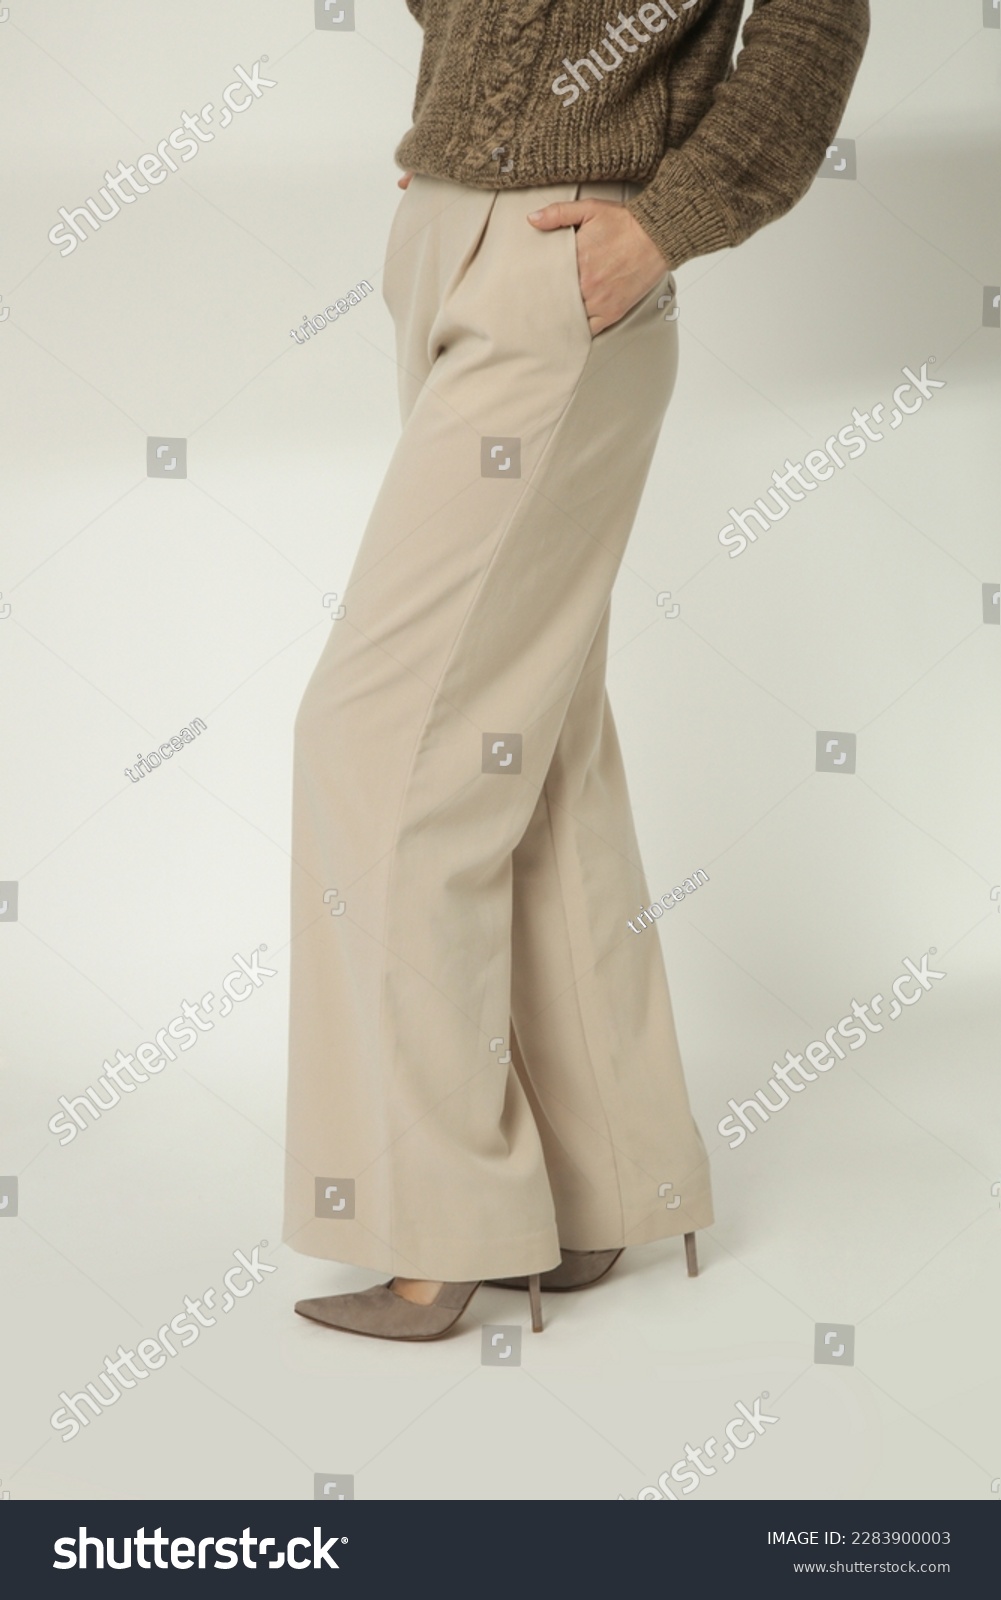 Female model wearing beige smart casual high rise wide leg trousers with high heels. Studio shot. #2283900003